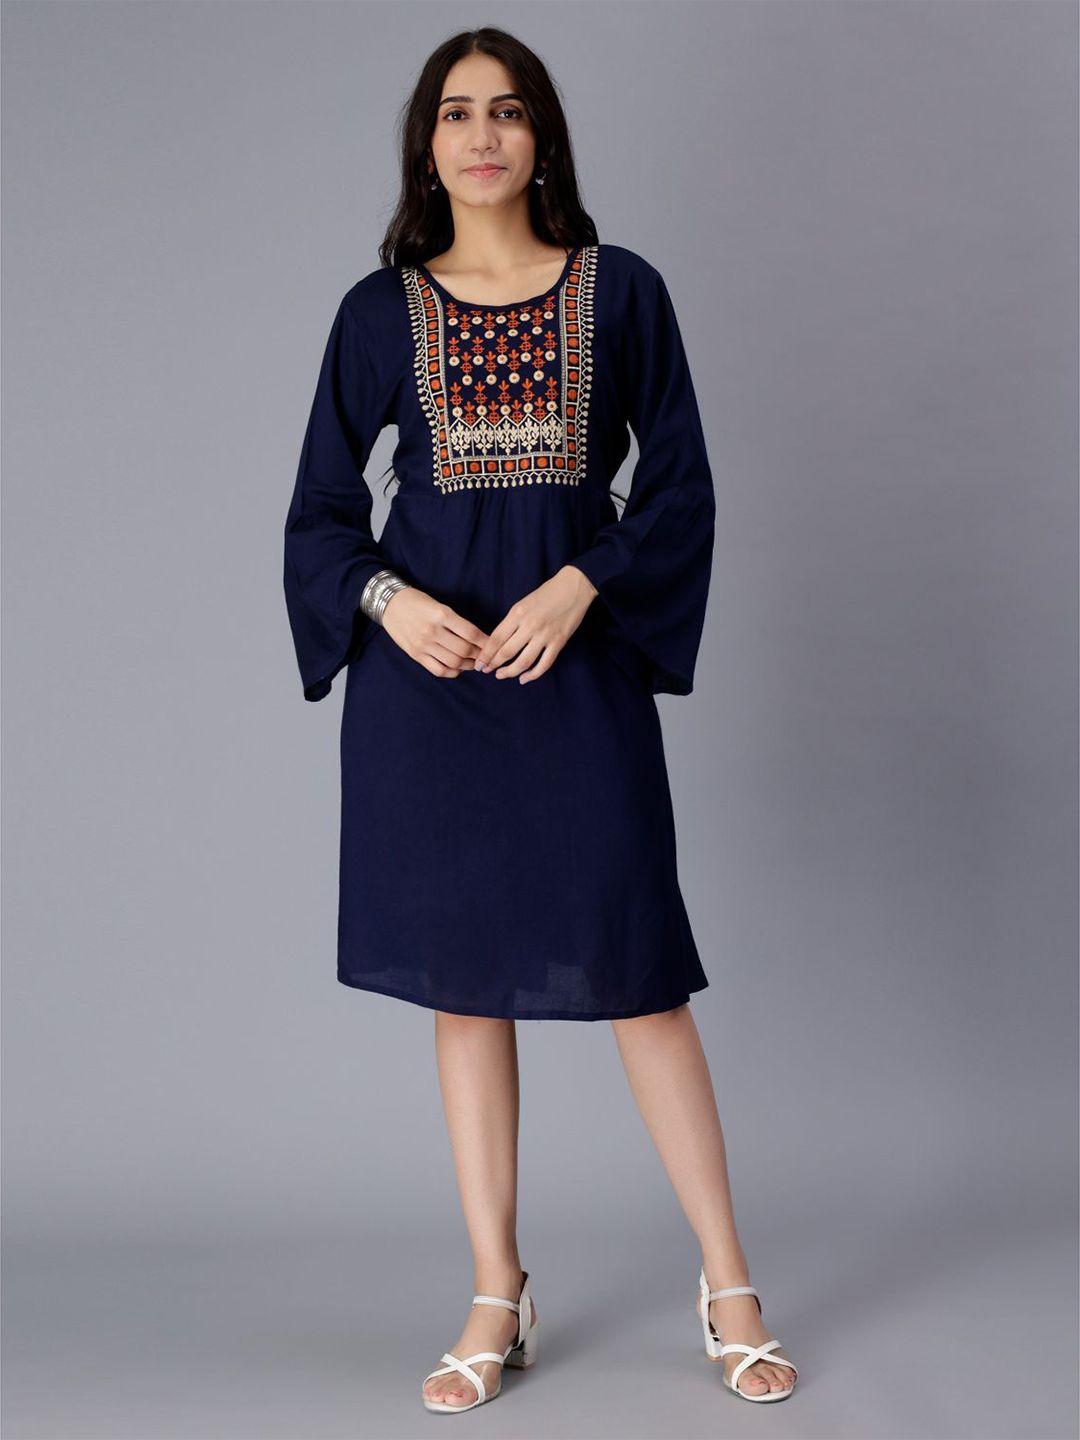 saakaa-ethnic-motifs-embroidered-bell-sleeves-sheath-dress